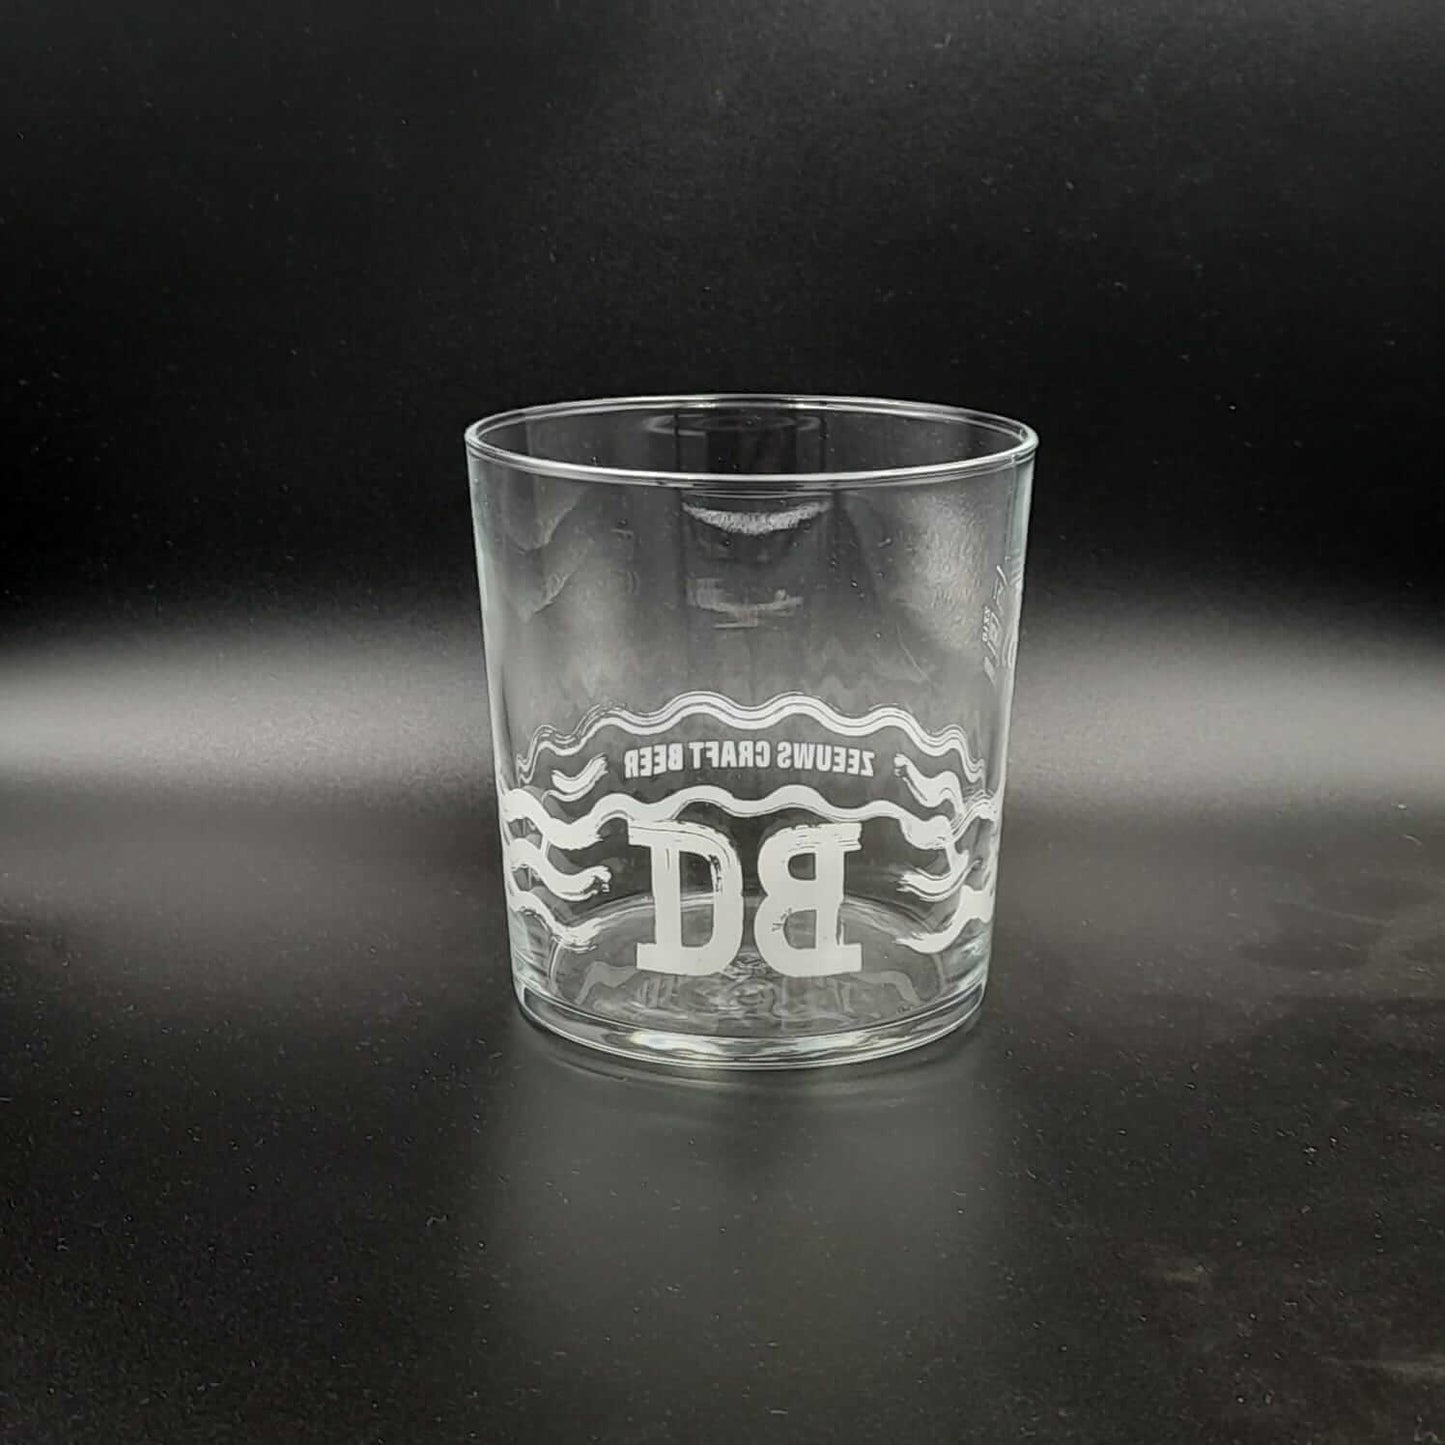 Dutch Bargain Glass | Glass Webshop Online Verdins Bierwinkel Rotterdam